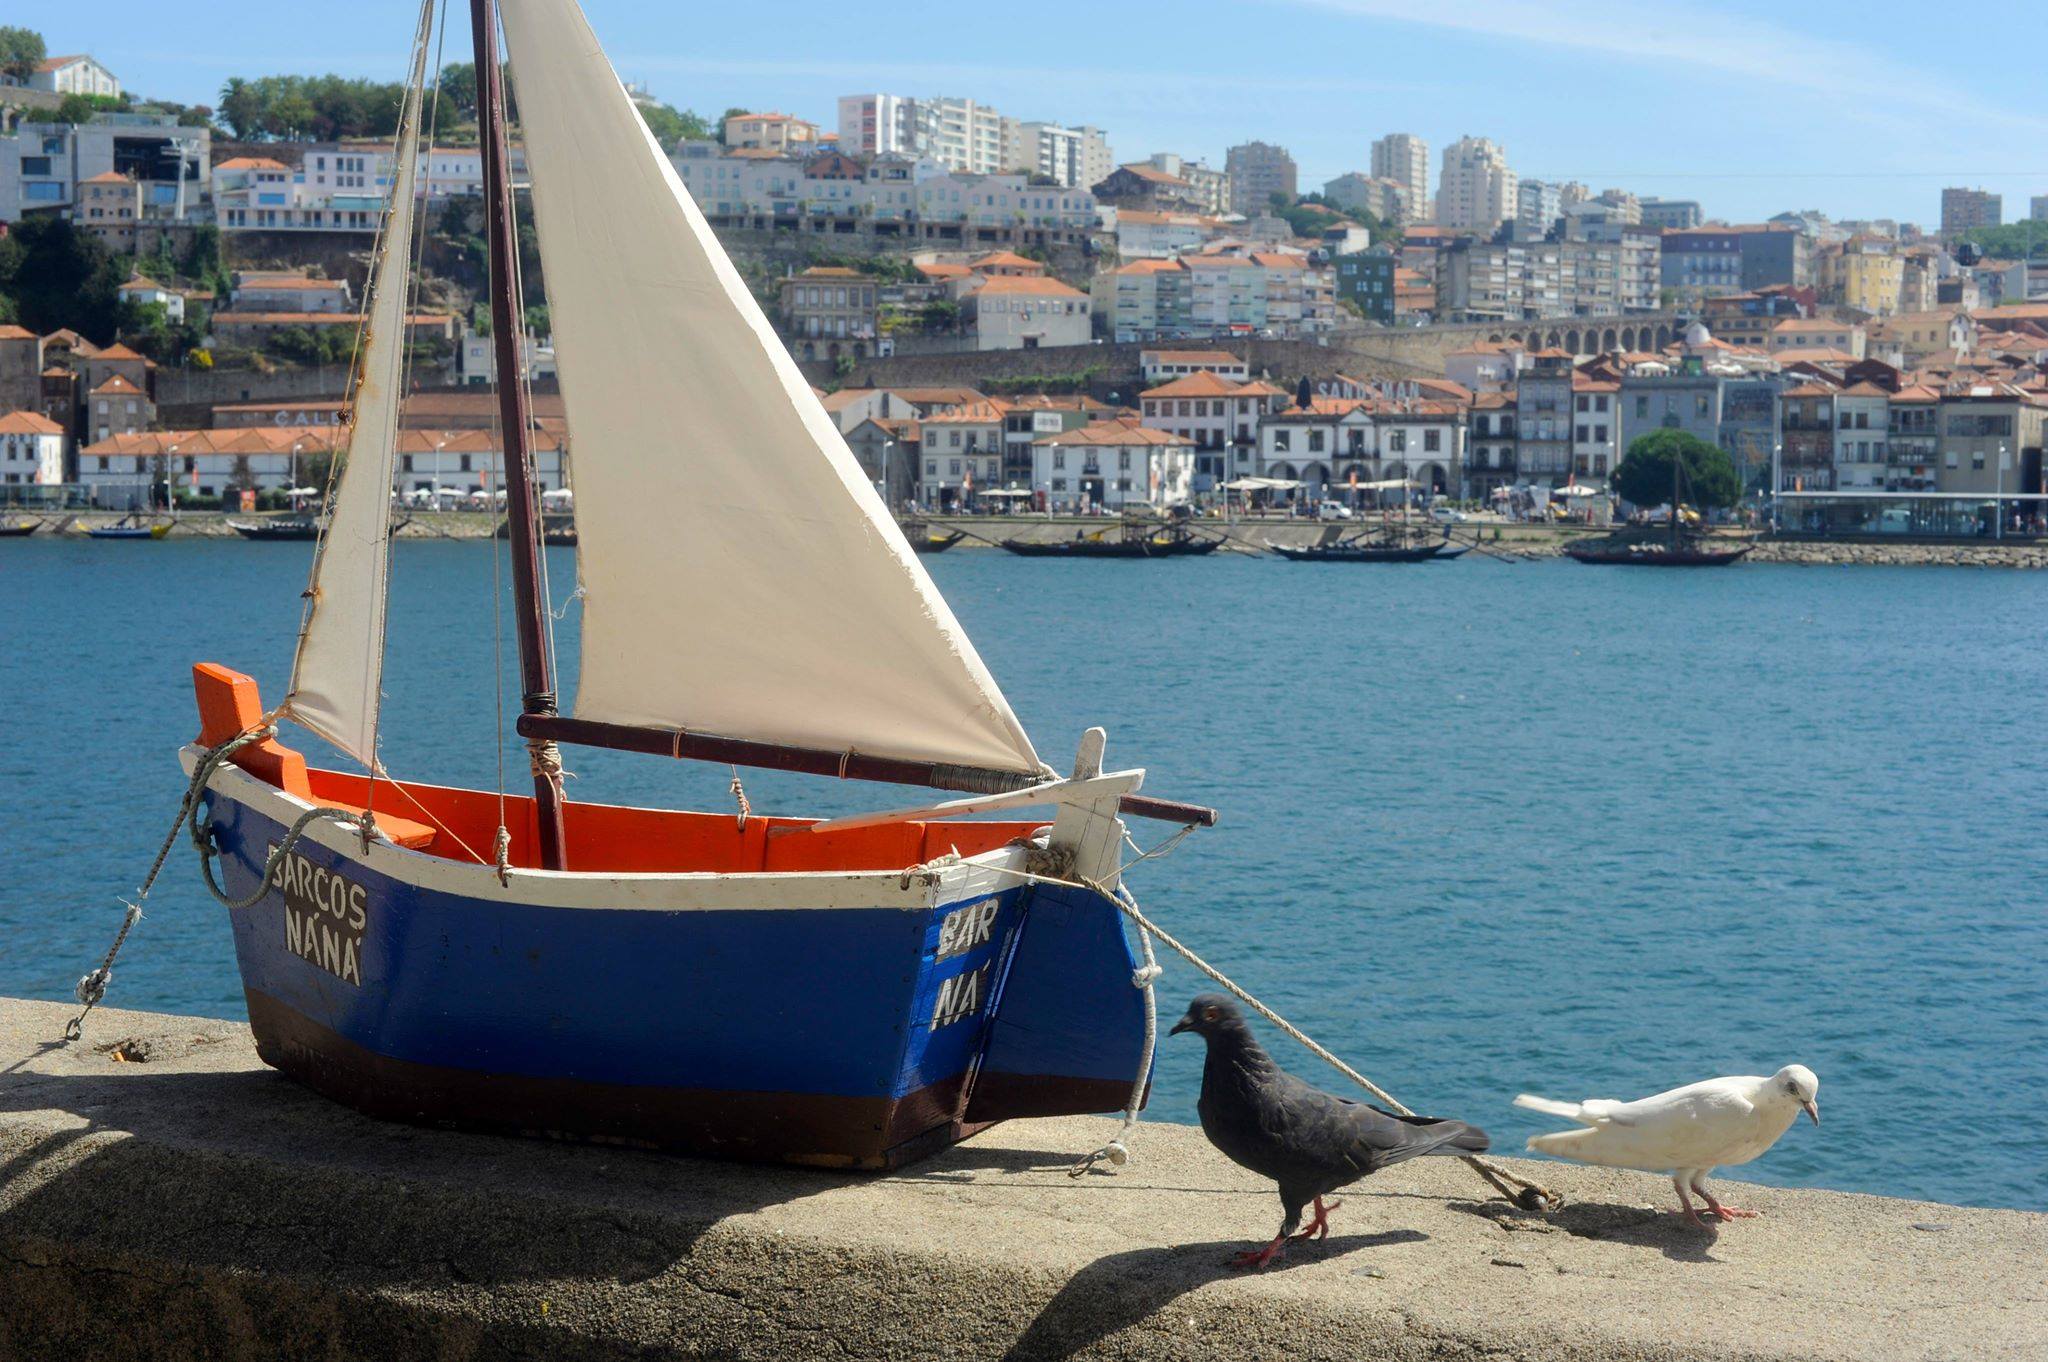 Boat-pigeons-Barcos-Nana.jpg